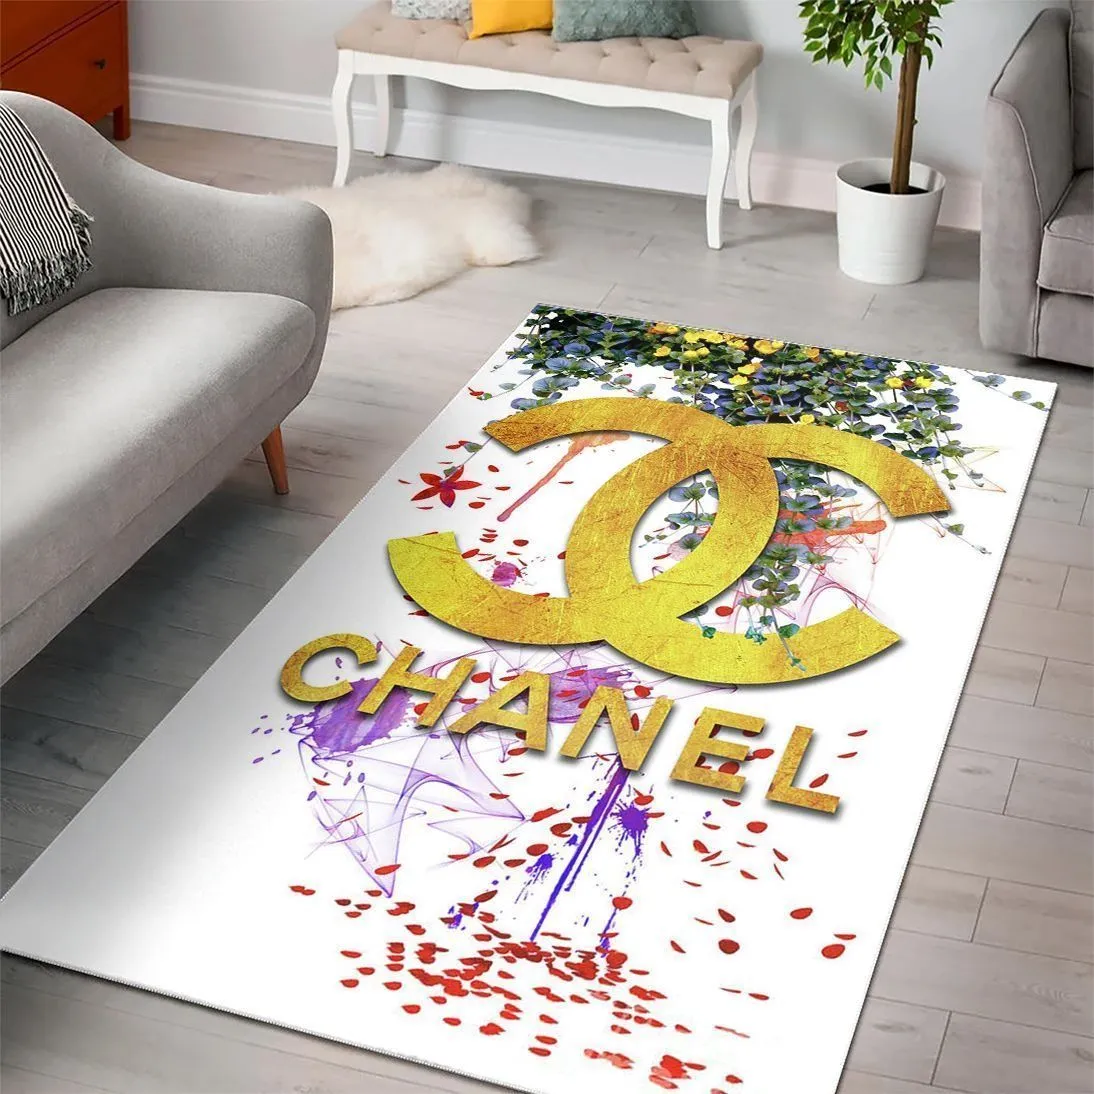 Chanel Paint Golden Rectangle Rug Area Carpet Fashion Brand Home Decor Door Mat Luxury